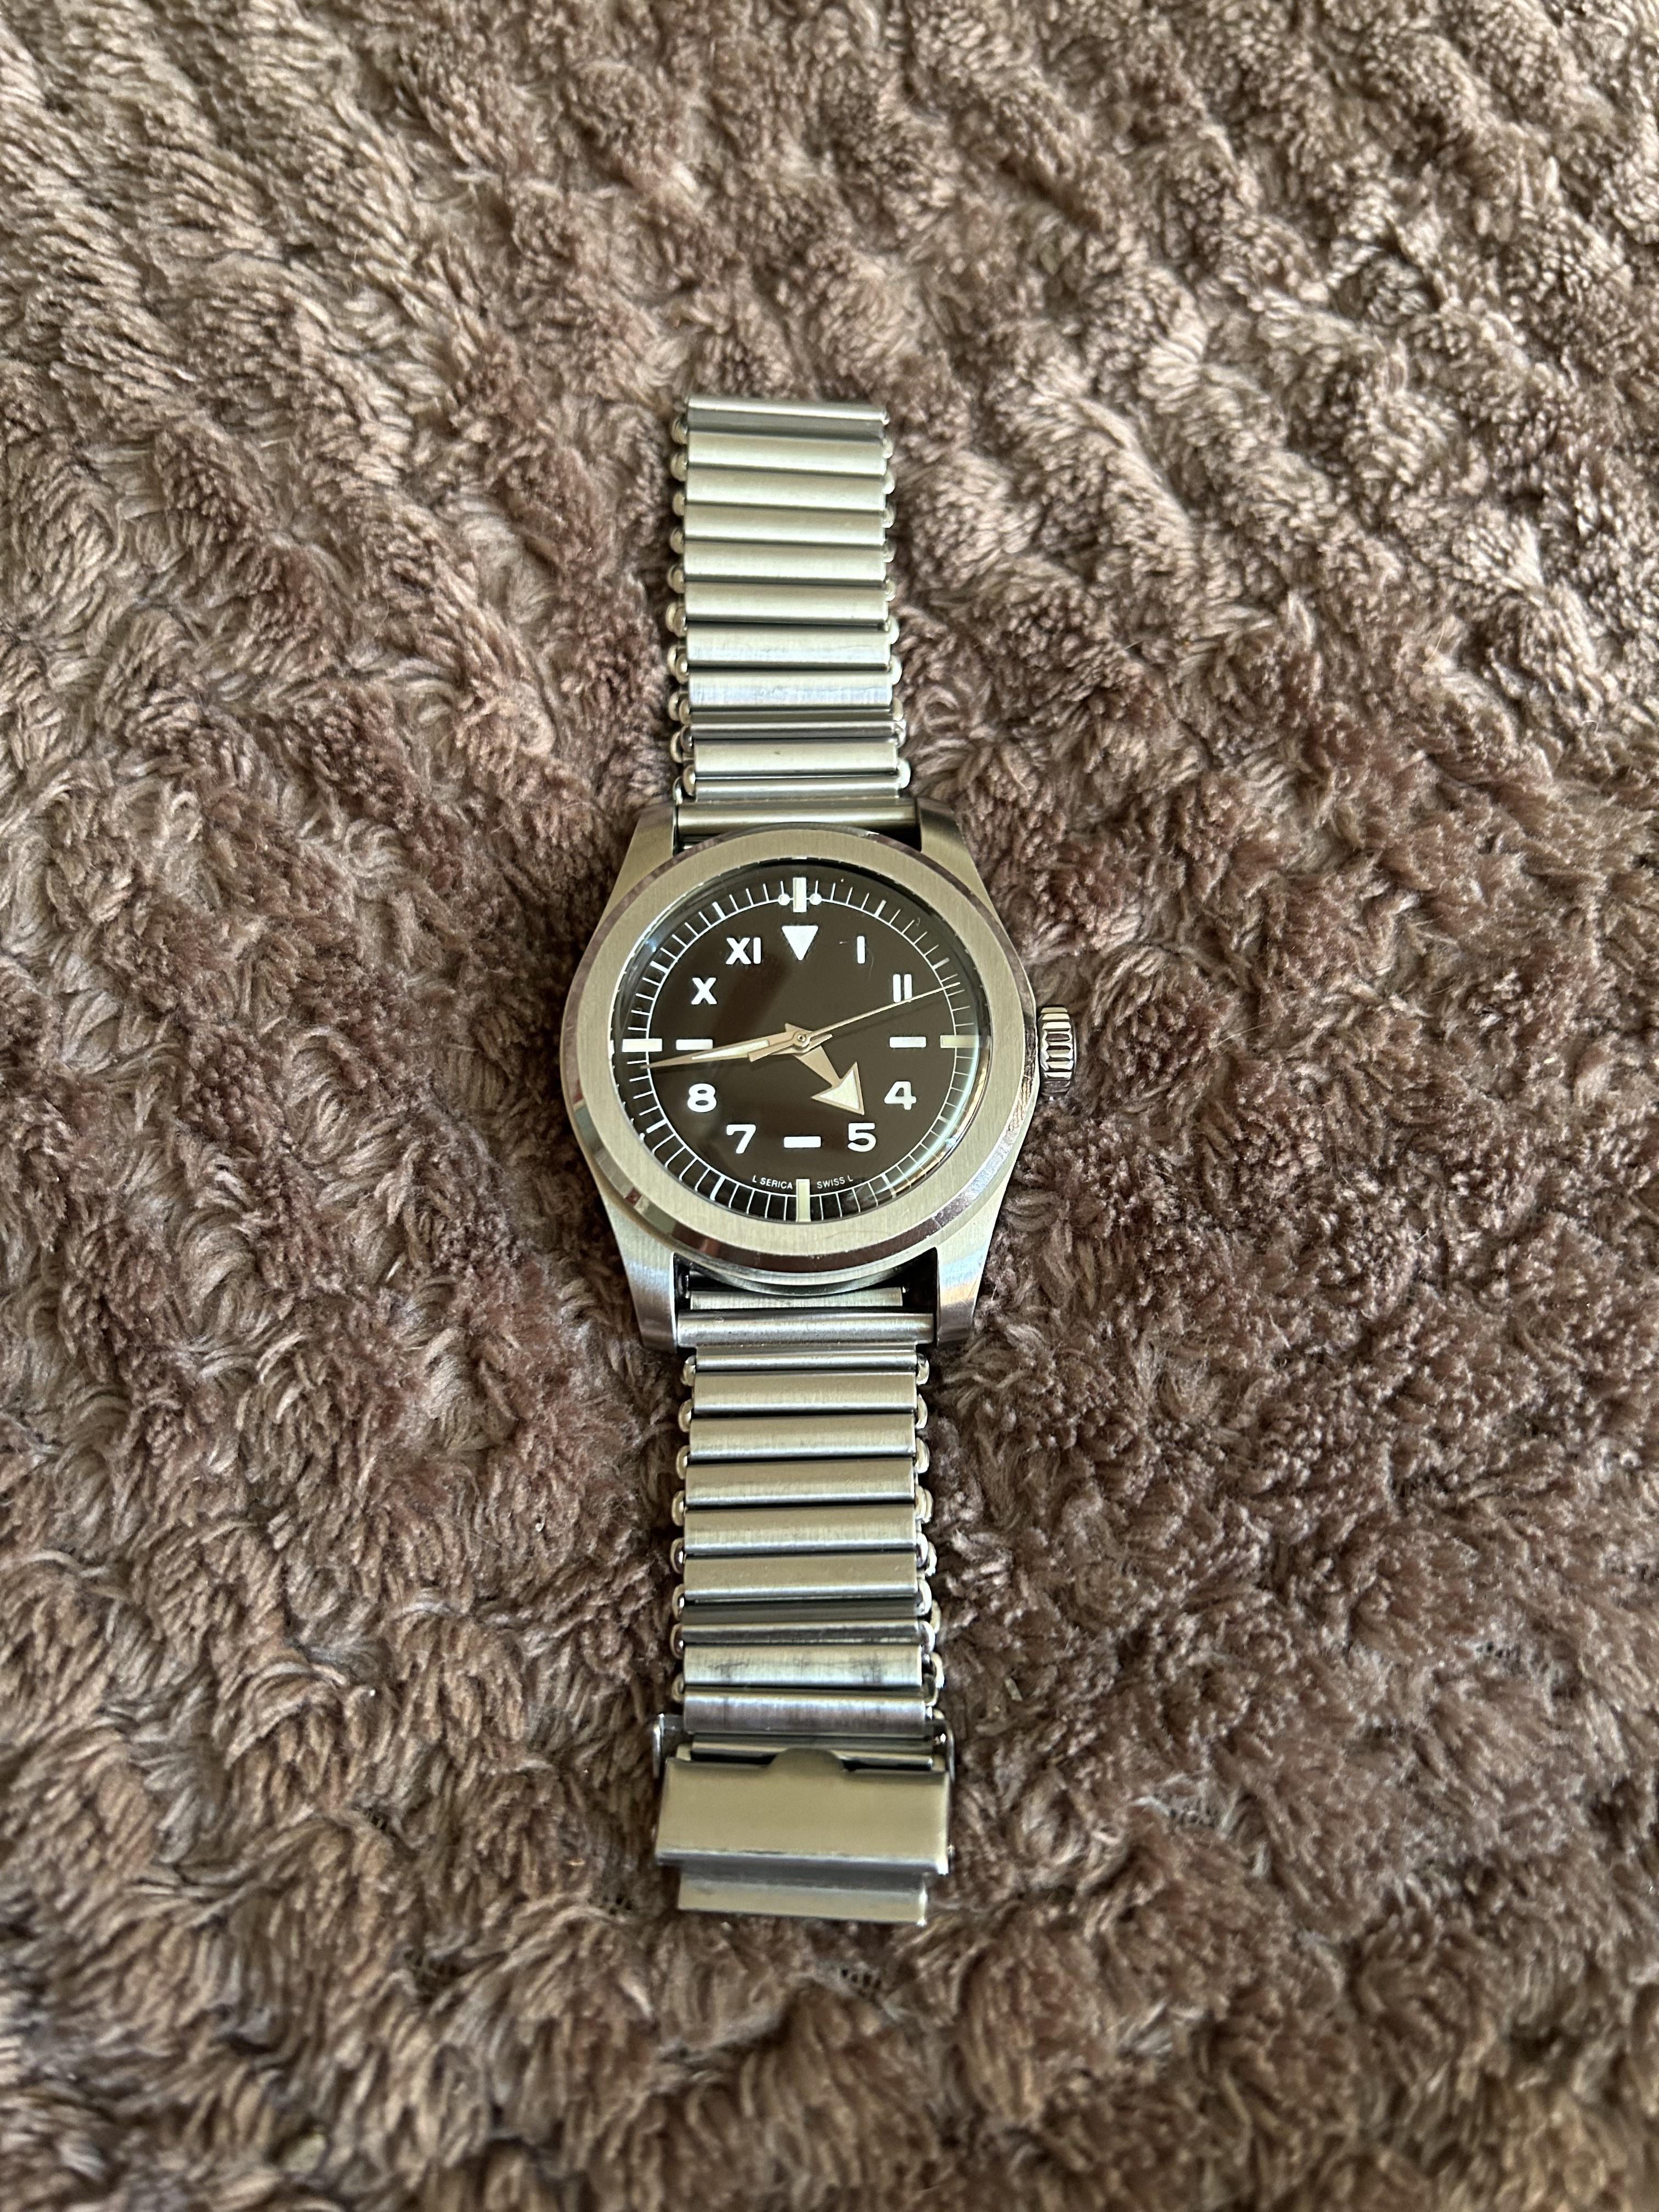 Serica 4512/ California 機械式時計 - 腕時計(アナログ)